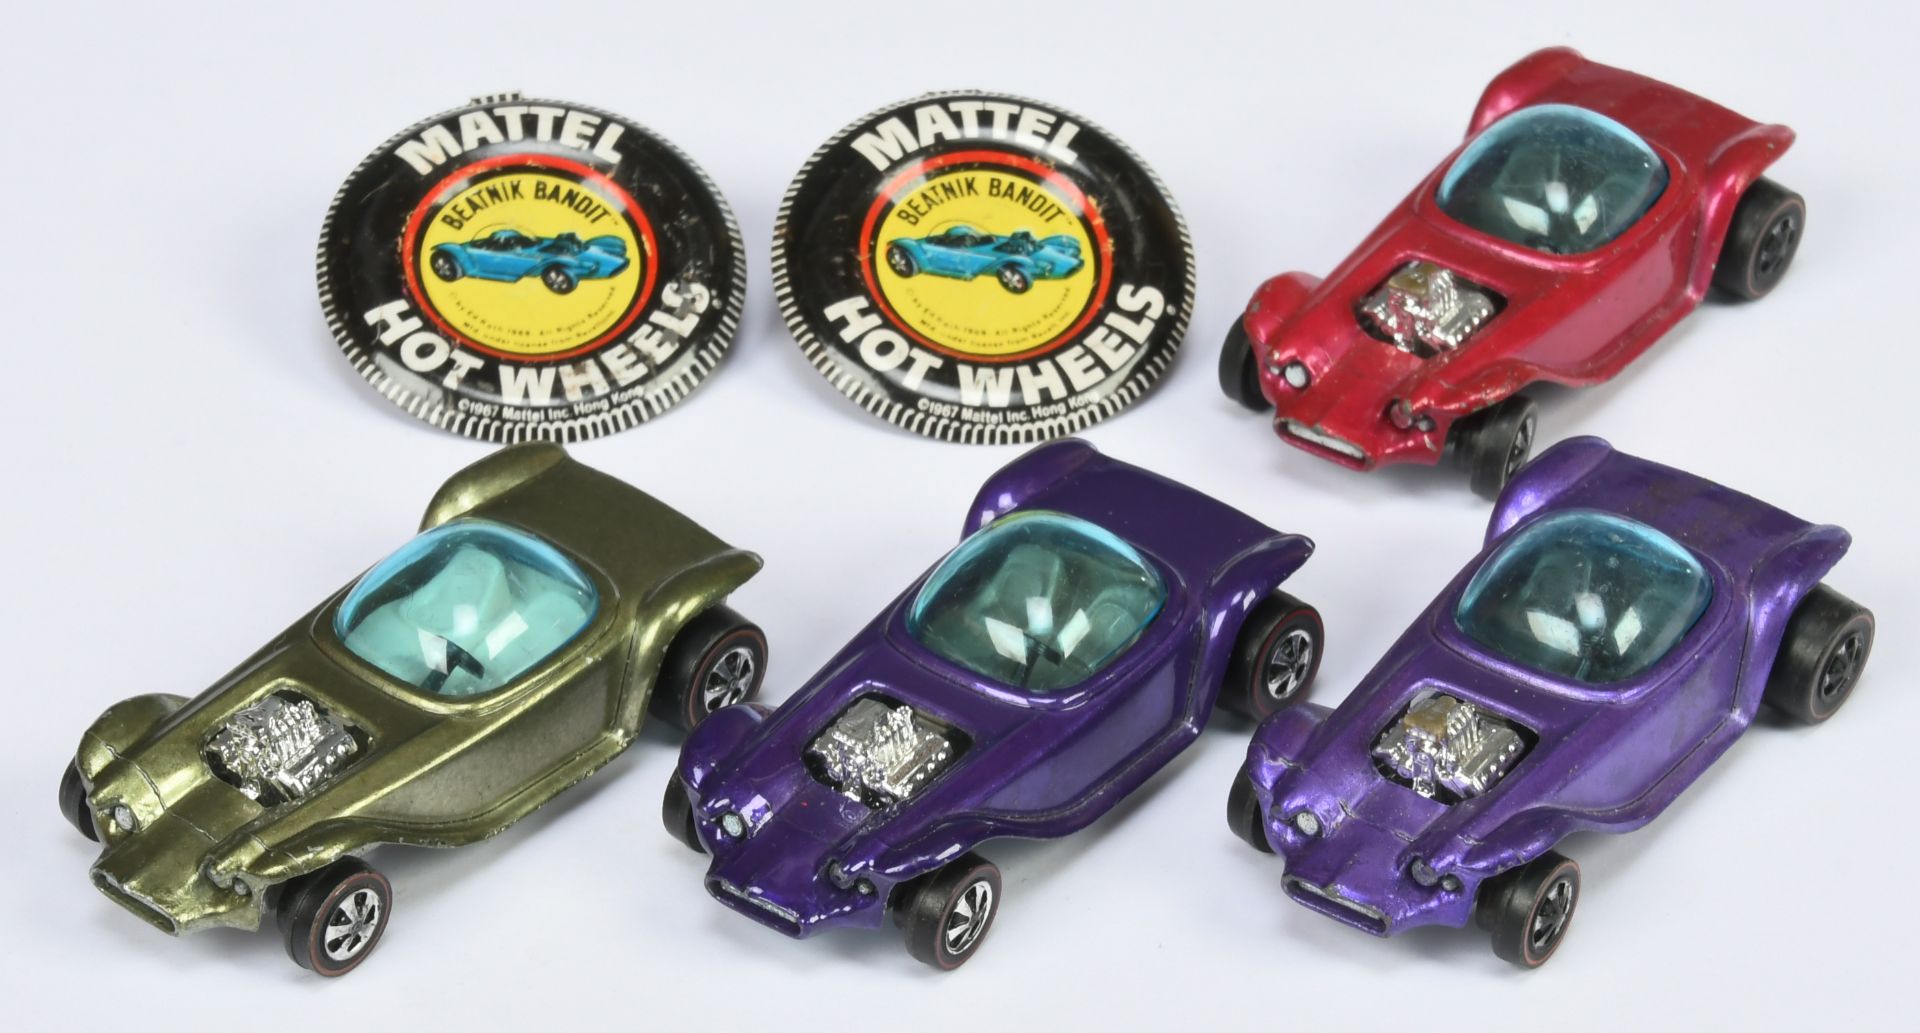 Mattel Hot Wheels - Redline - Beatnik Bandit group (1) champagne gold (2) metallic red (3) purple...